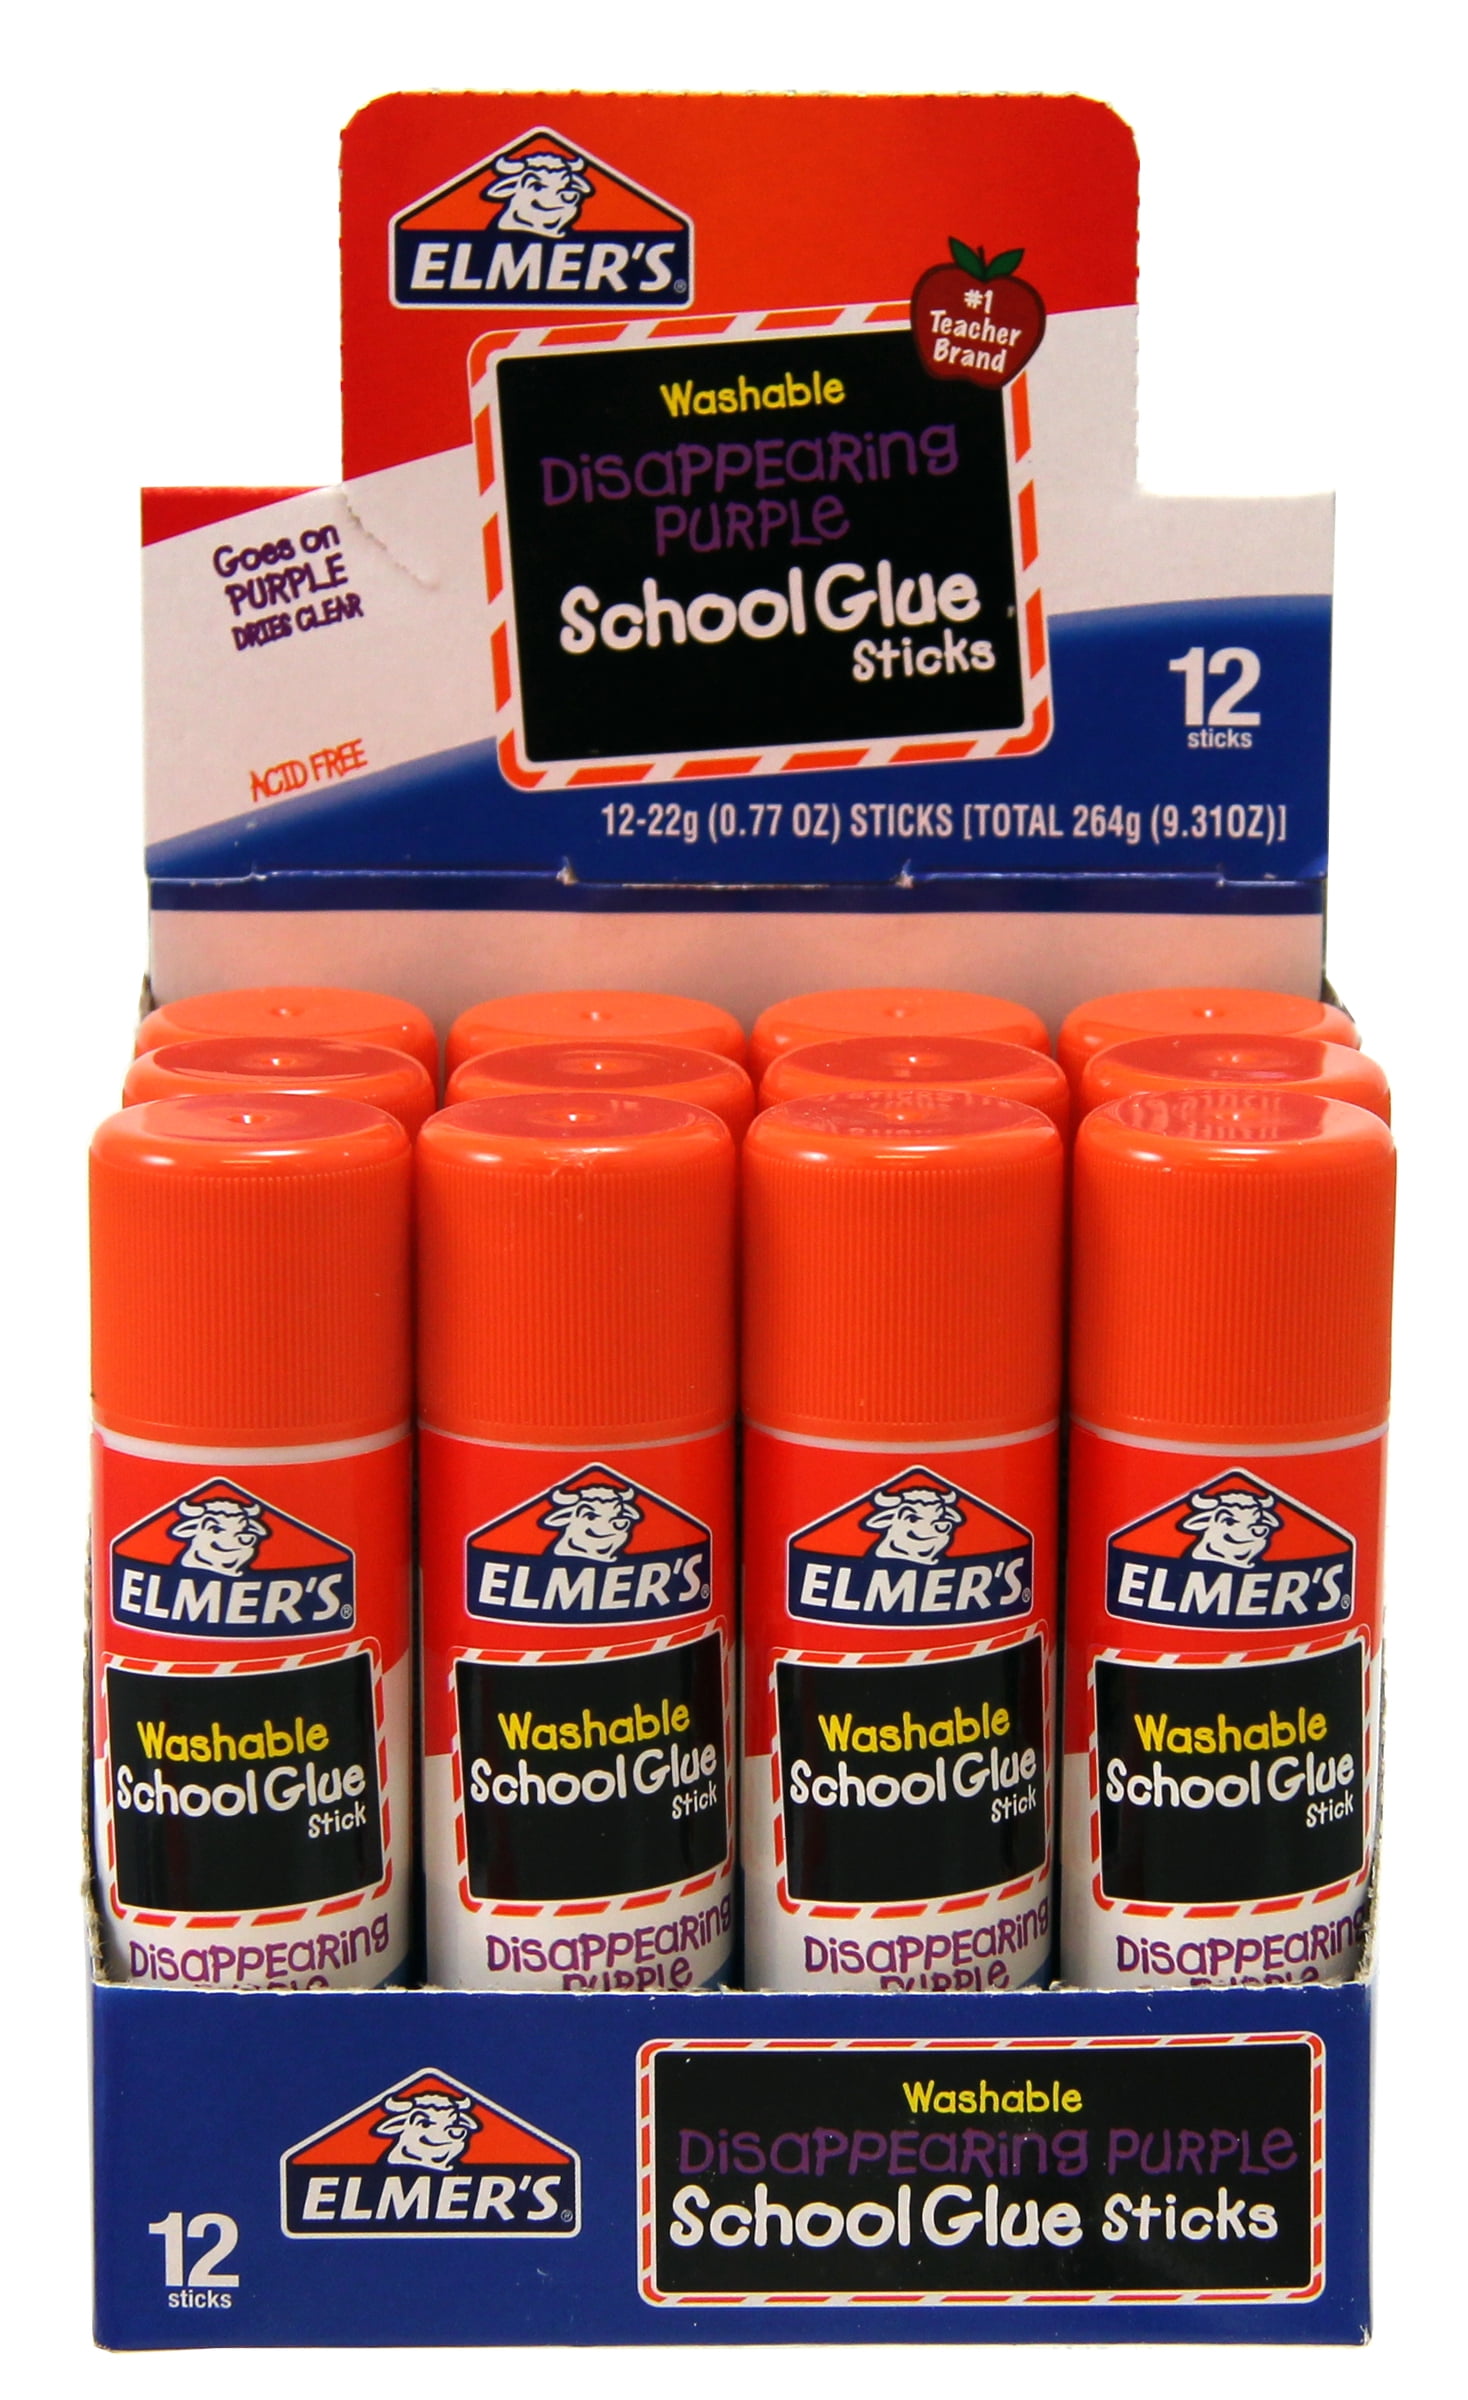 Elmer's Washable Liquid School Glue and Disappearing Purple Elmer's School Glue Stick Bundle (big)